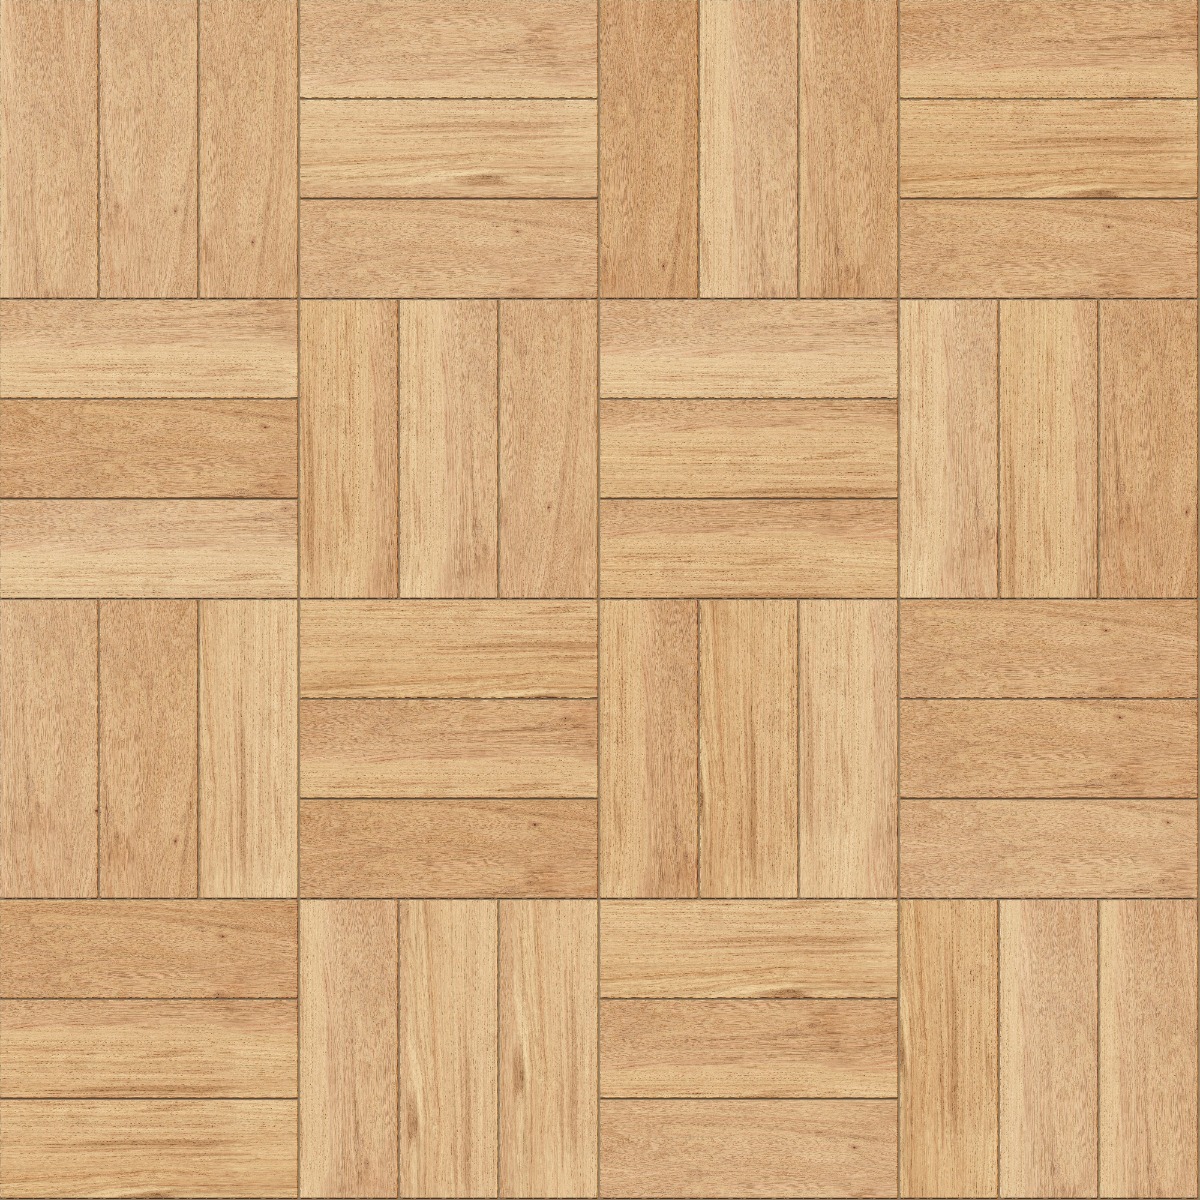 A seamless wood texture with oak veneered mdf boards arranged in a Basketweave pattern